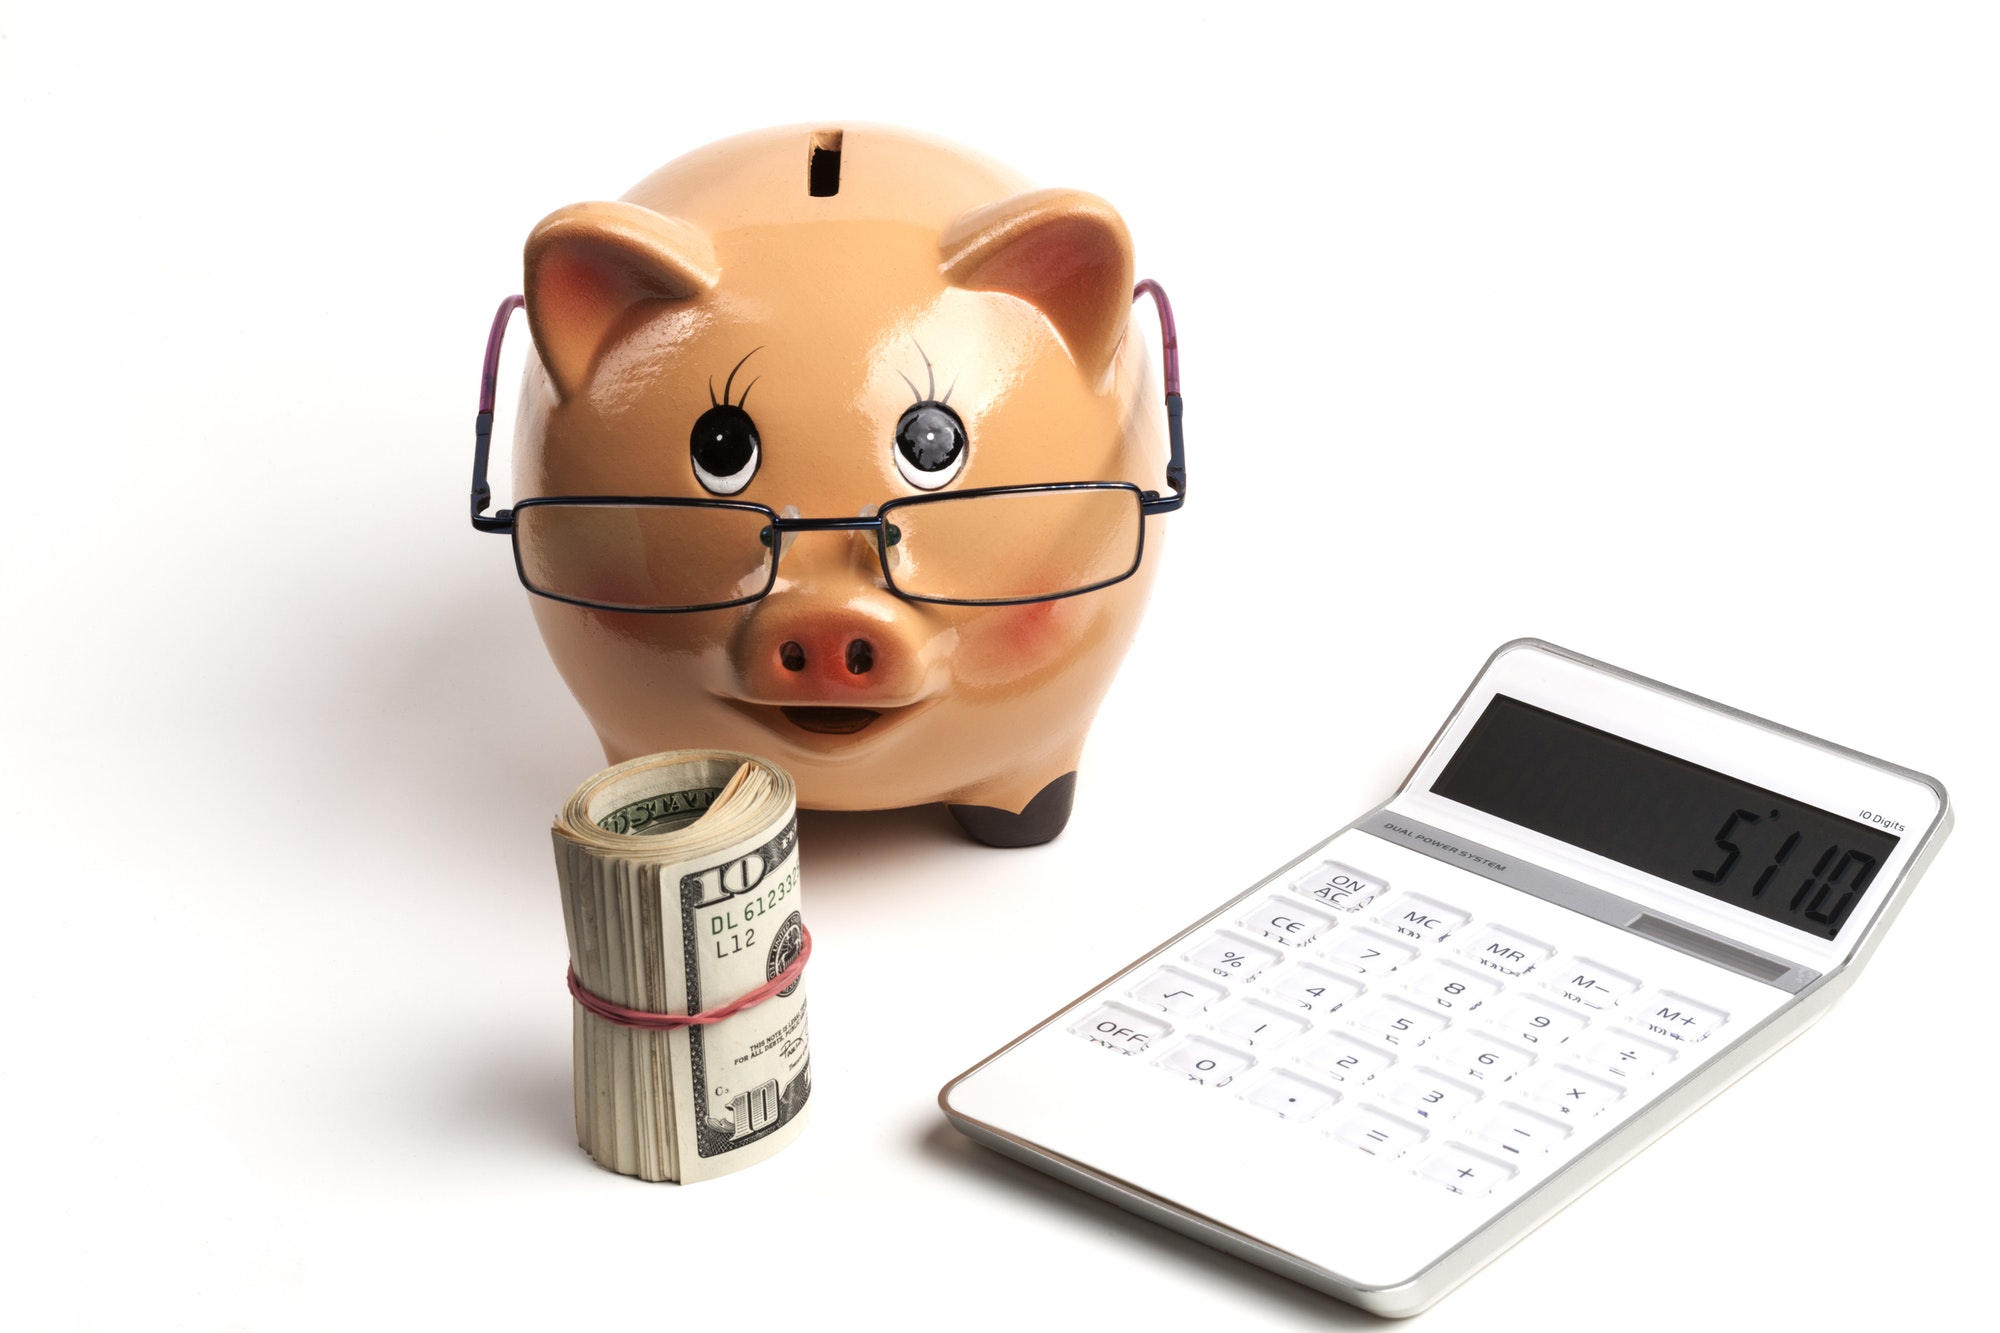 Piggy Bank With White Calculator